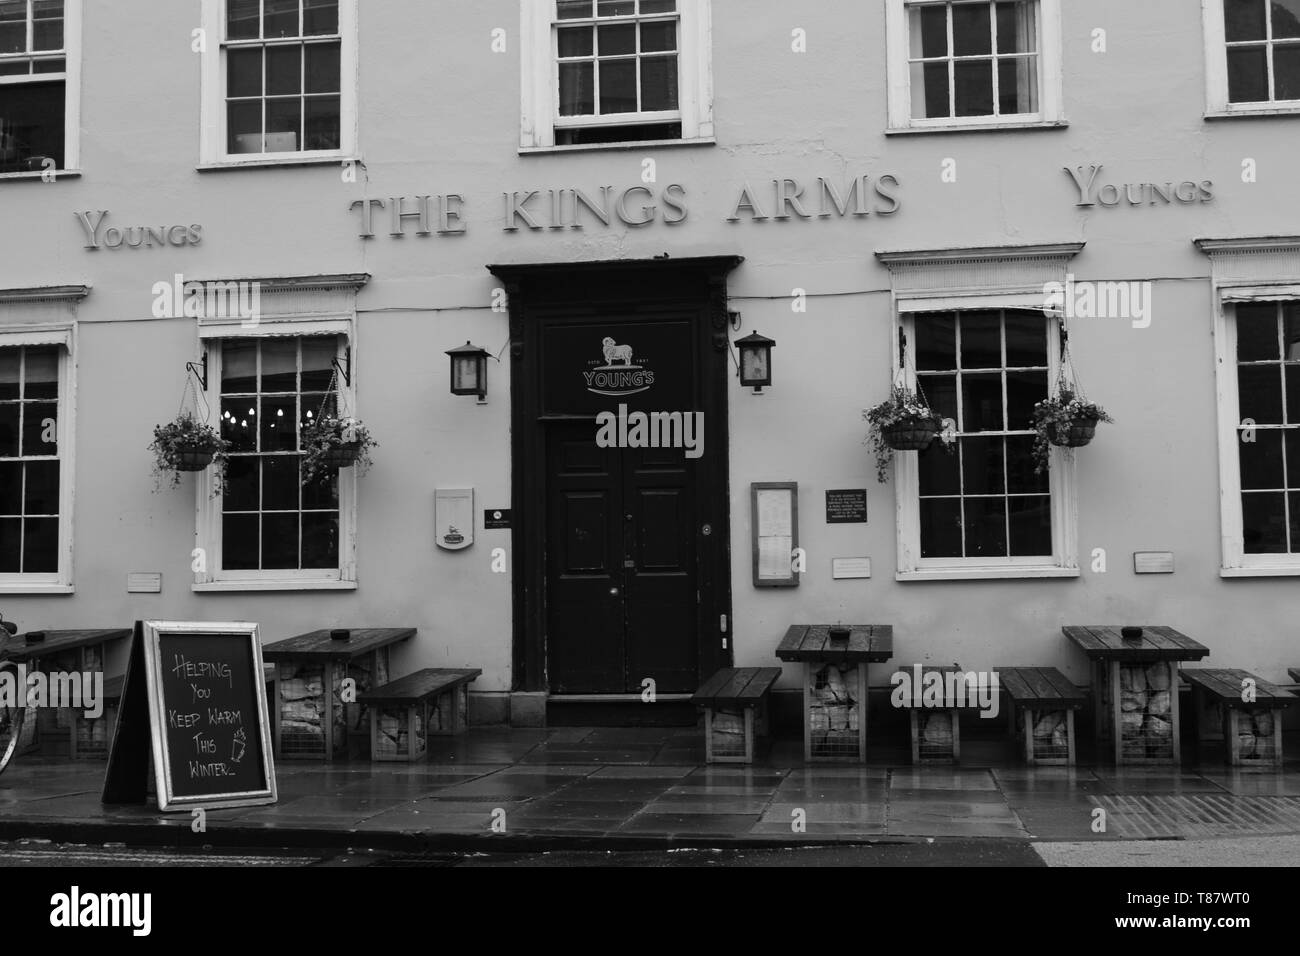 Kings Arms Pub Oxford England UK Stock Photo - Alamy